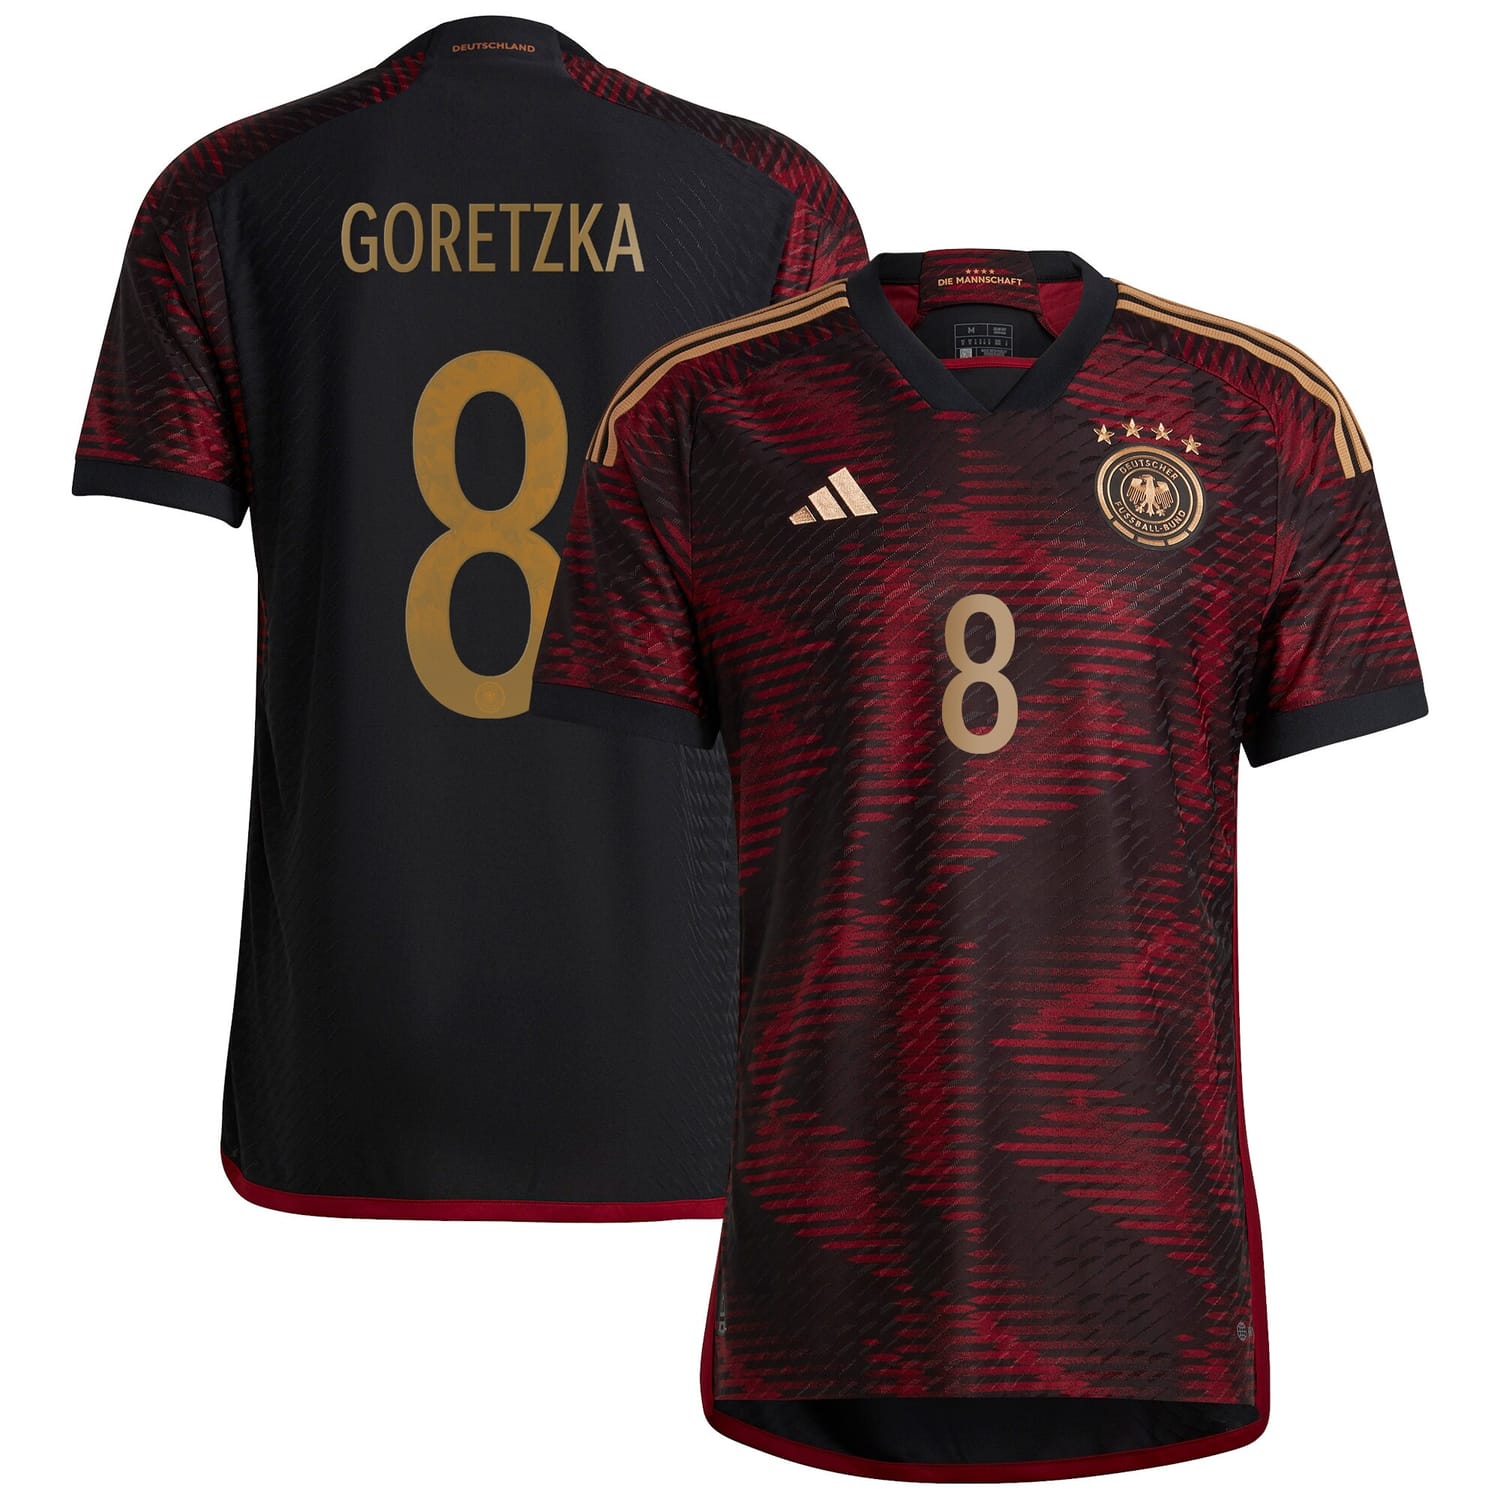 Germany National Team Away Authentic Jersey Shirt player Leon Goretzka 8 printing for Men